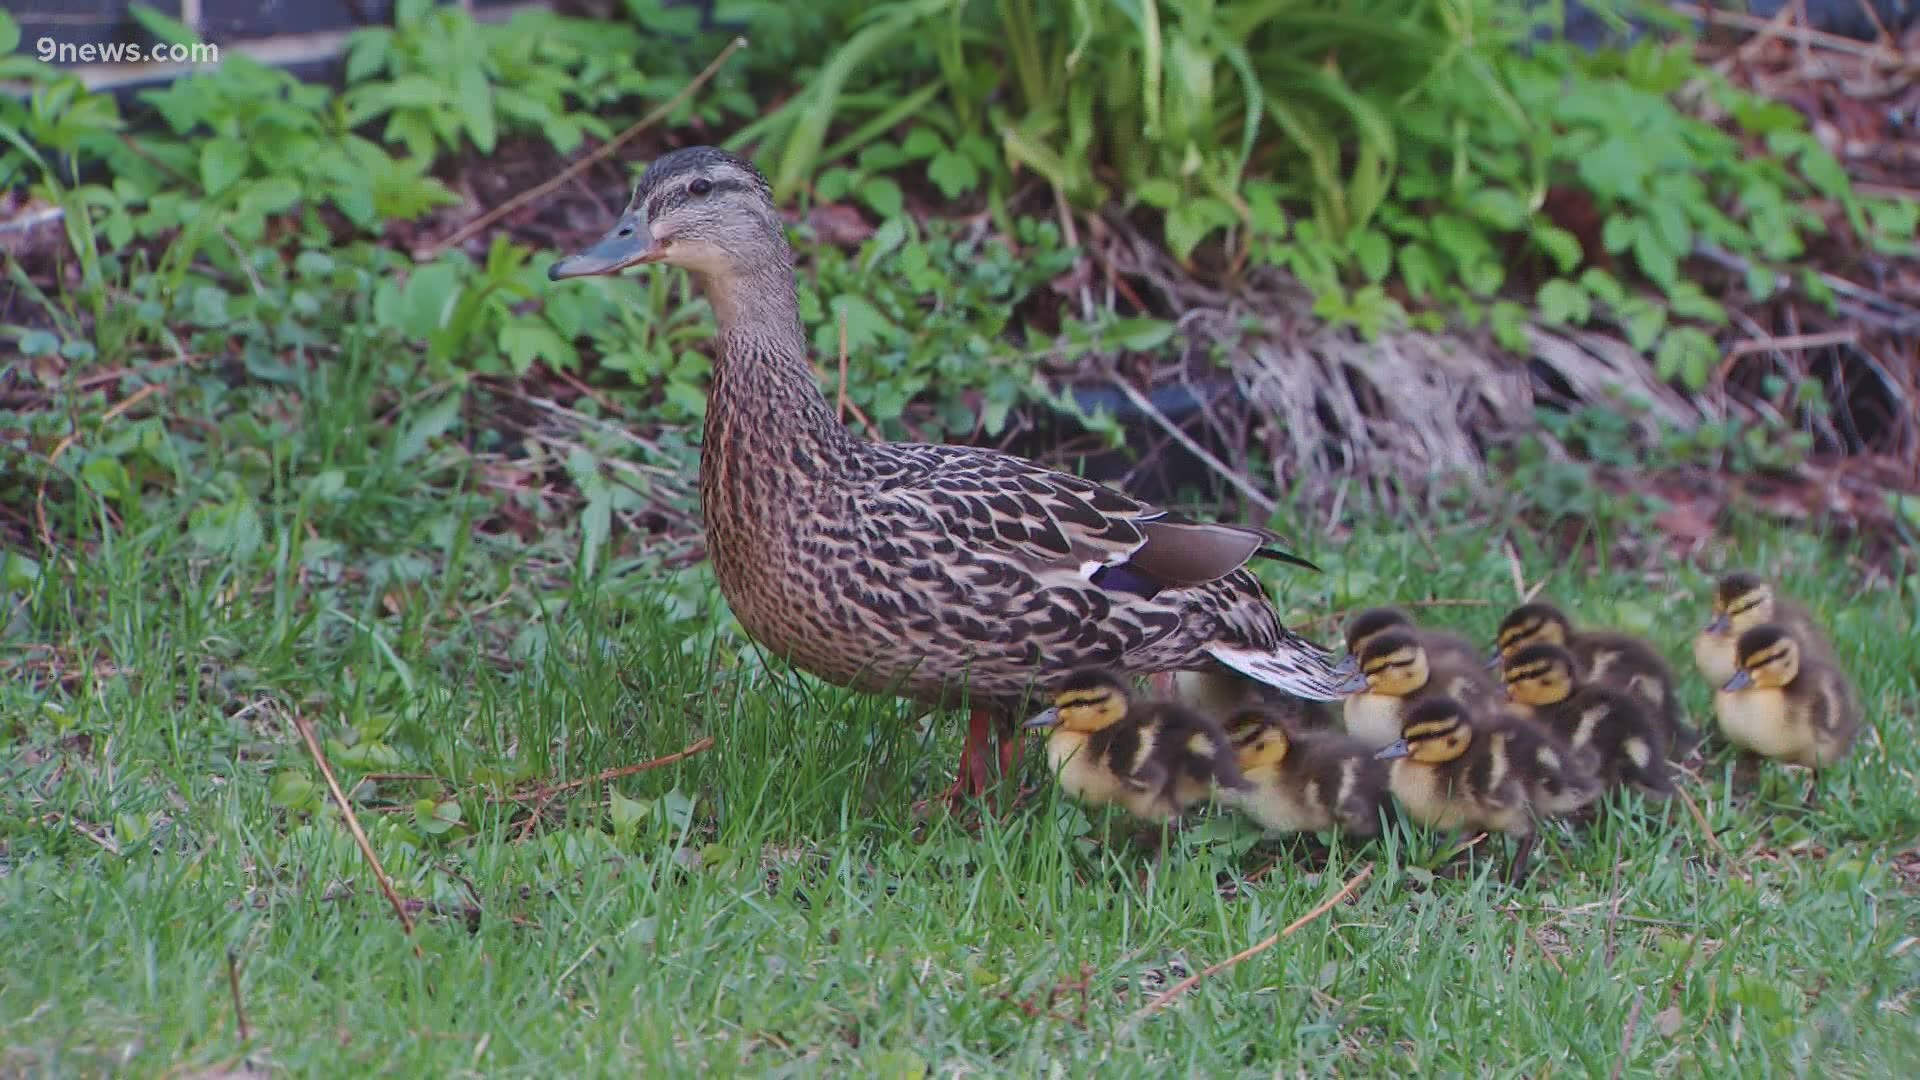 Ten ducklings followed their mom through a Minnesota elementary school, continuing a 20-year tradition.